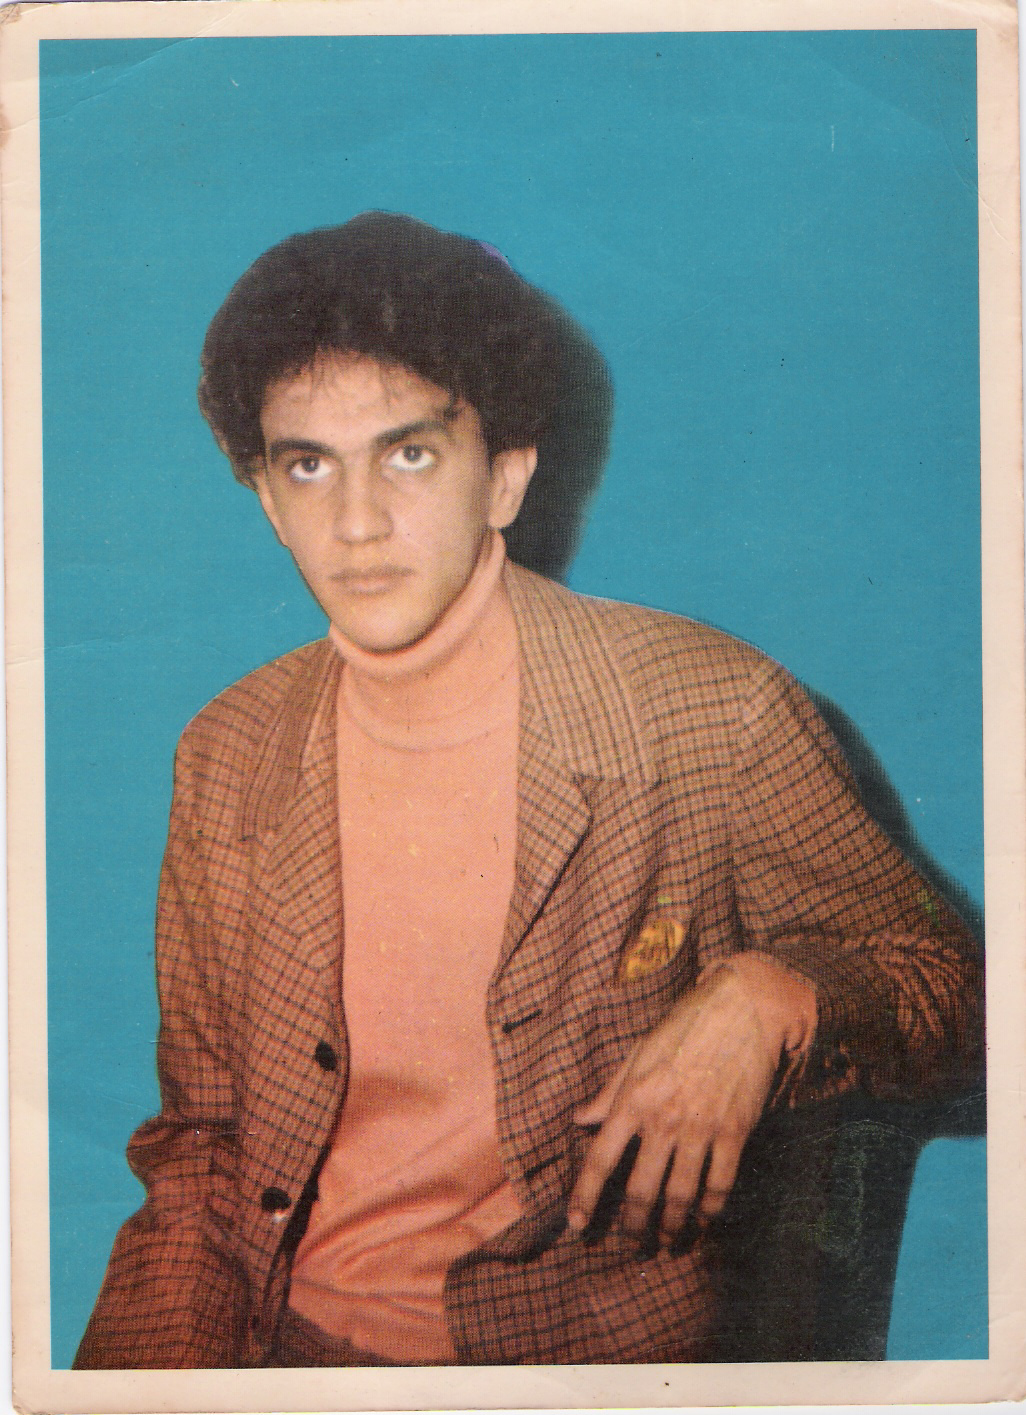 Caetano Veloso в молодости